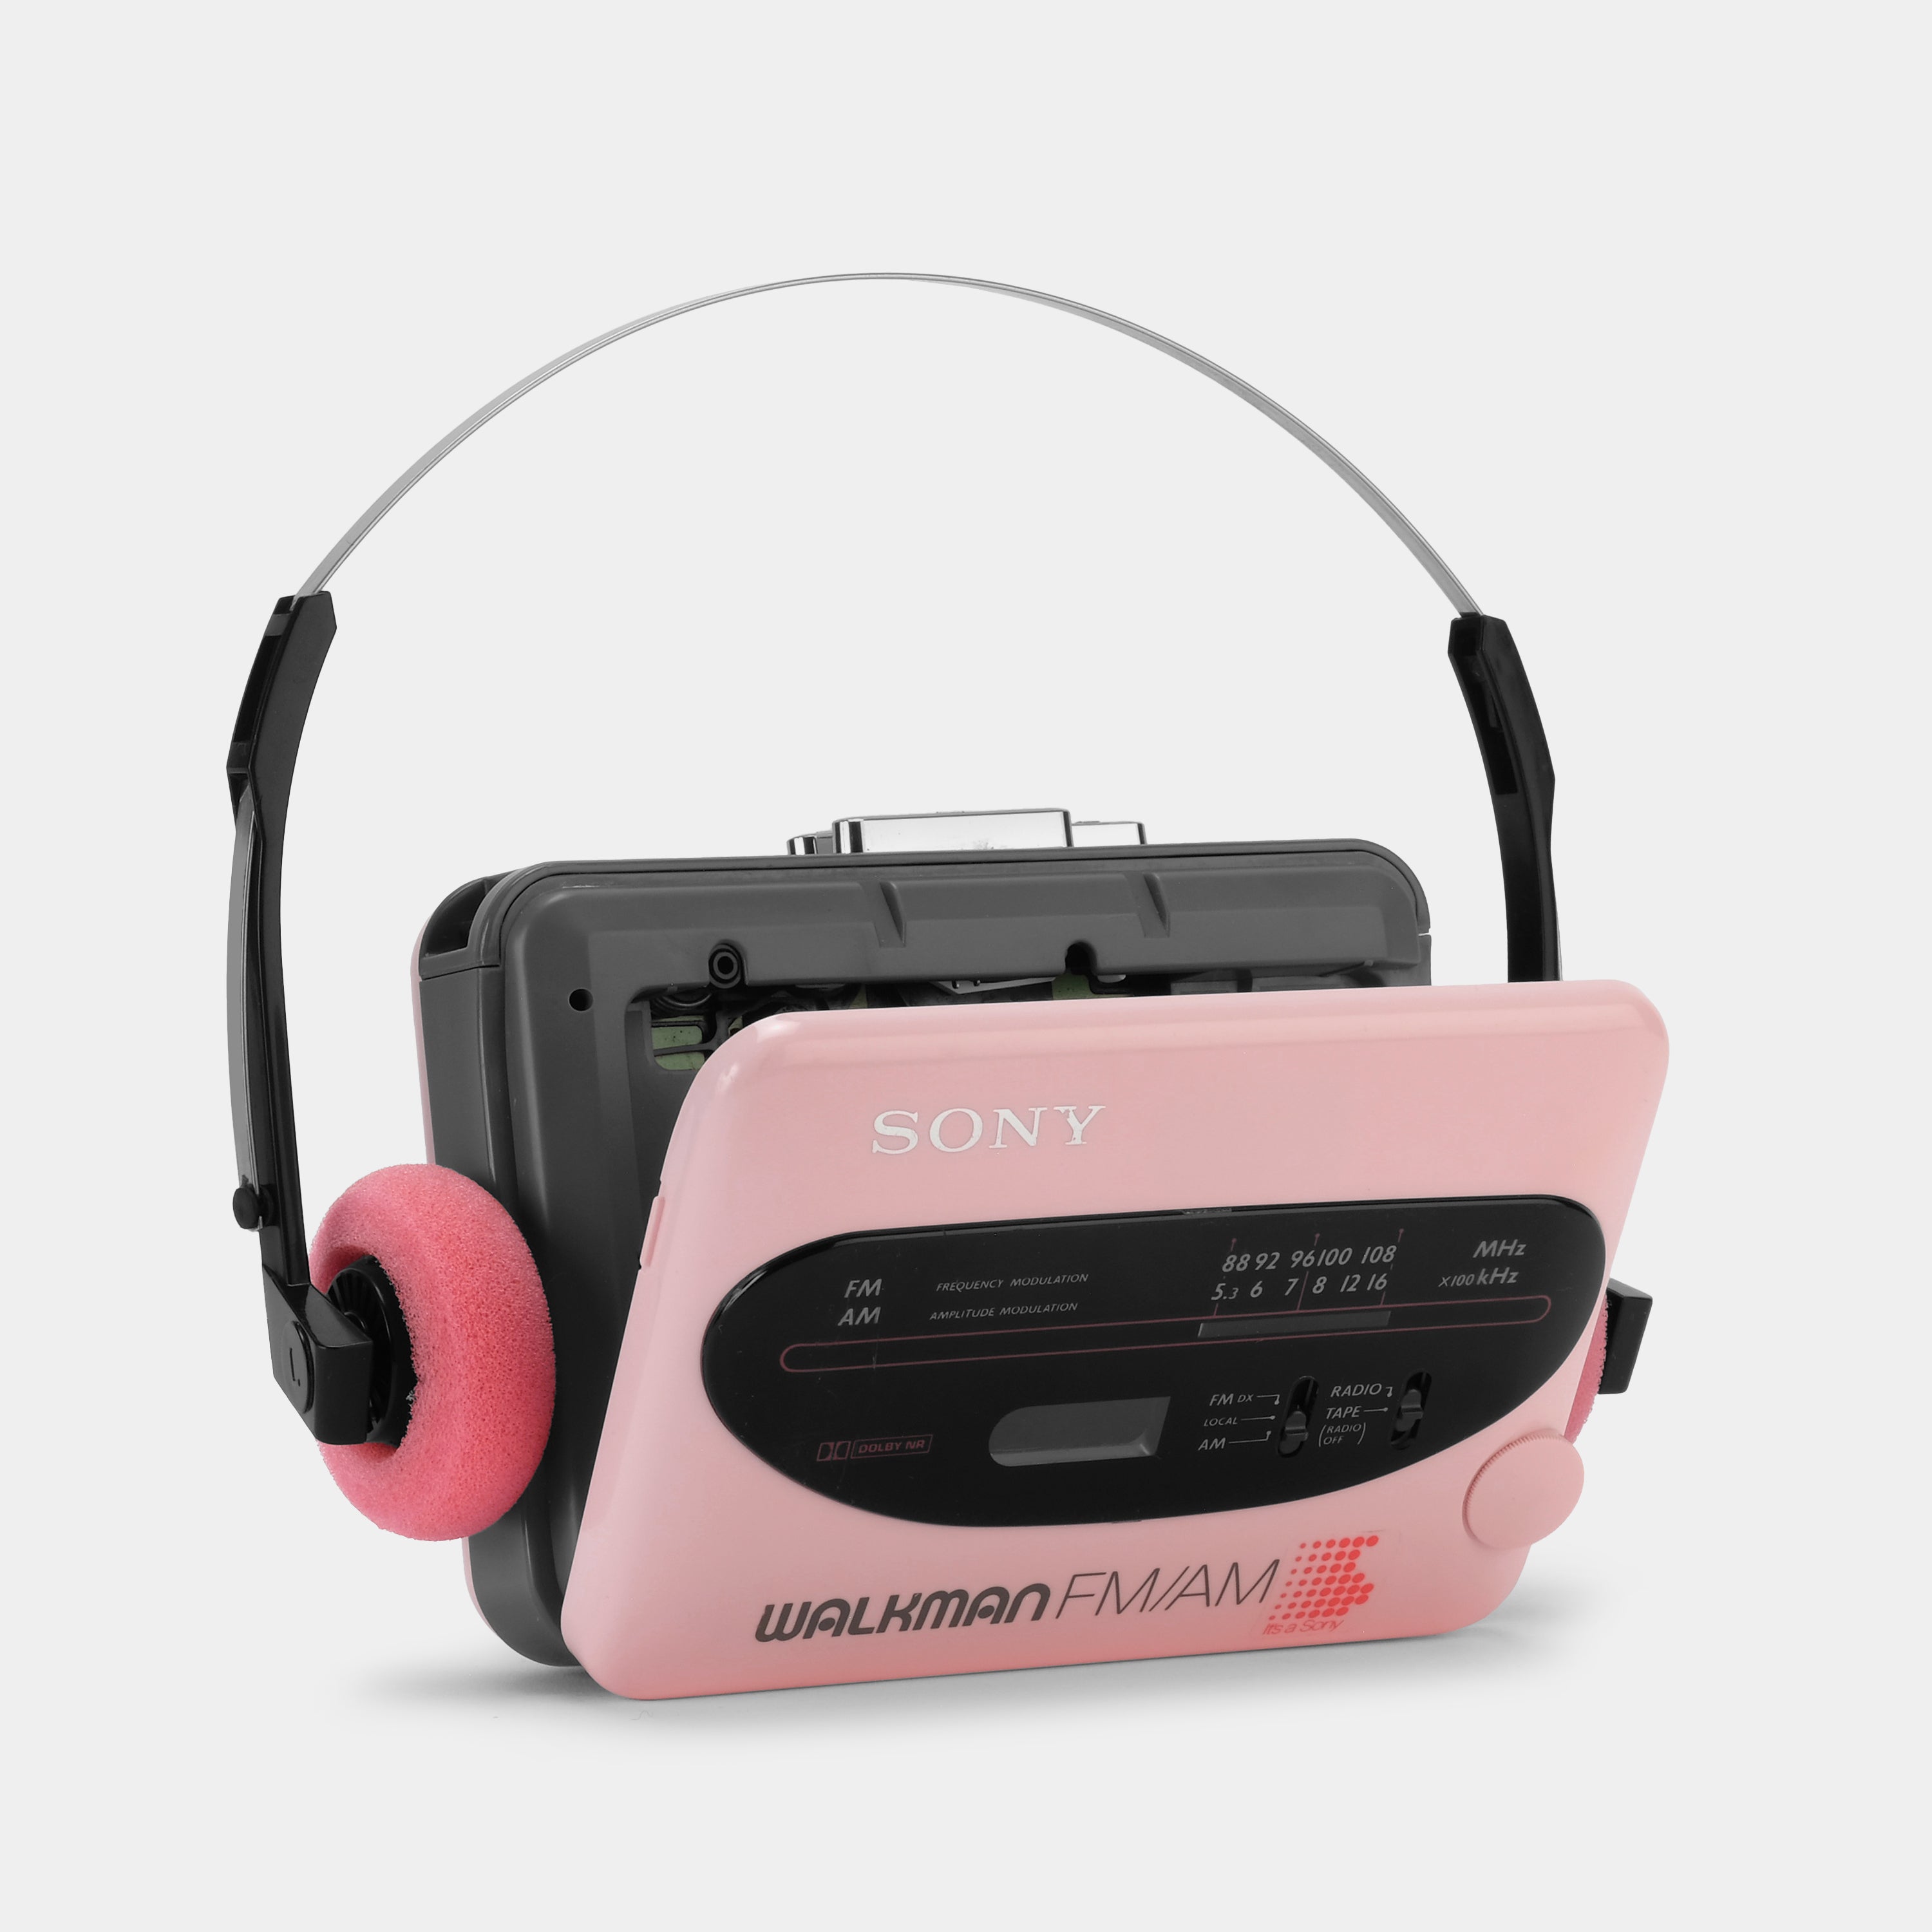 Sony Walkman WM-F38/F68 AM/FM Pink Portable Cassette Player